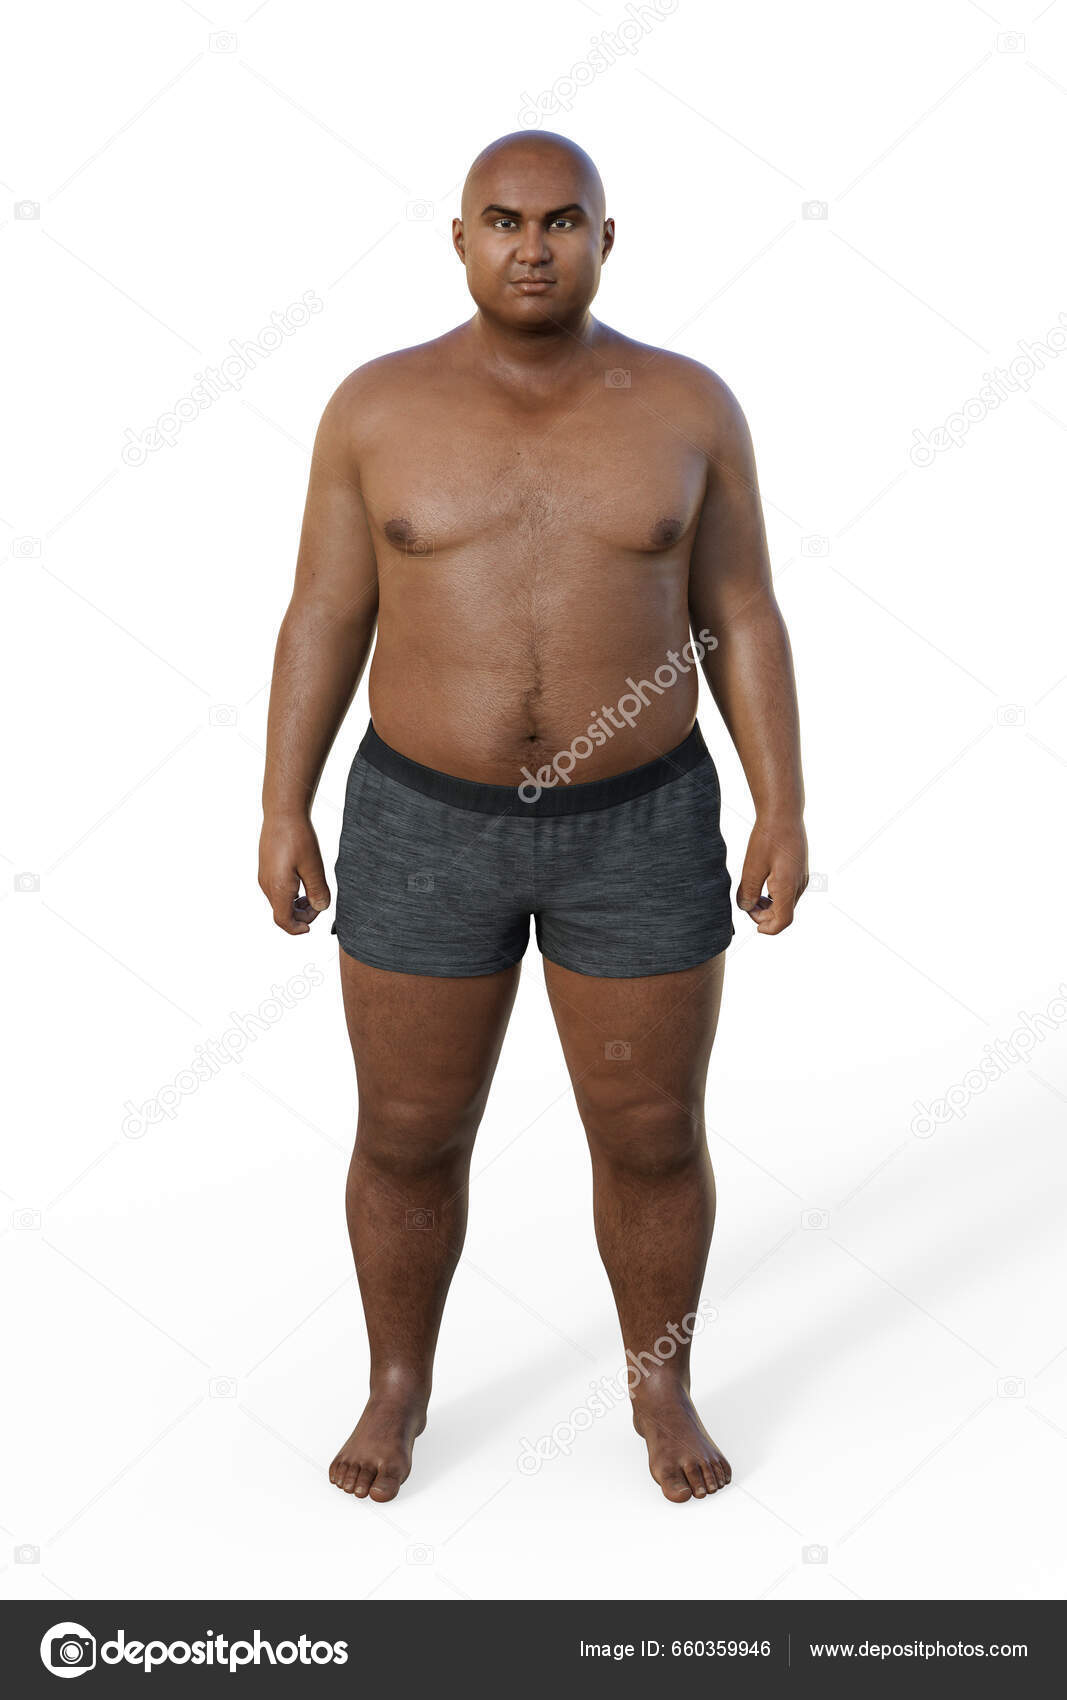 https://st5.depositphotos.com/5316818/66035/i/1600/depositphotos_660359946-stock-photo-illustration-male-body-endomorph-body.jpg